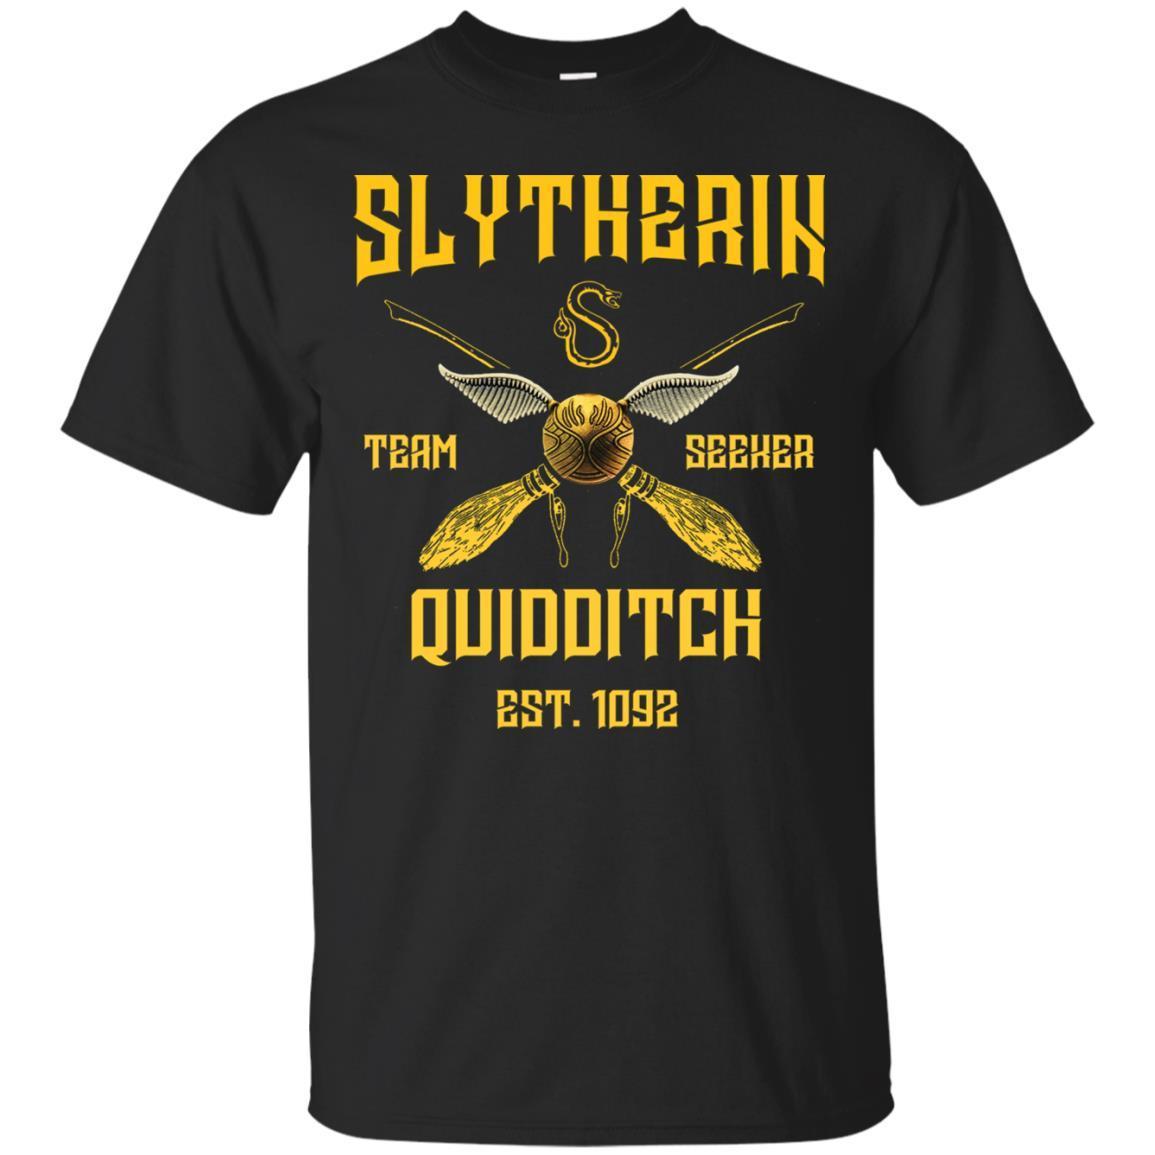 Slytherin Quiddith Team Seeker Est 1092 Harry Potter Shirt Black S 